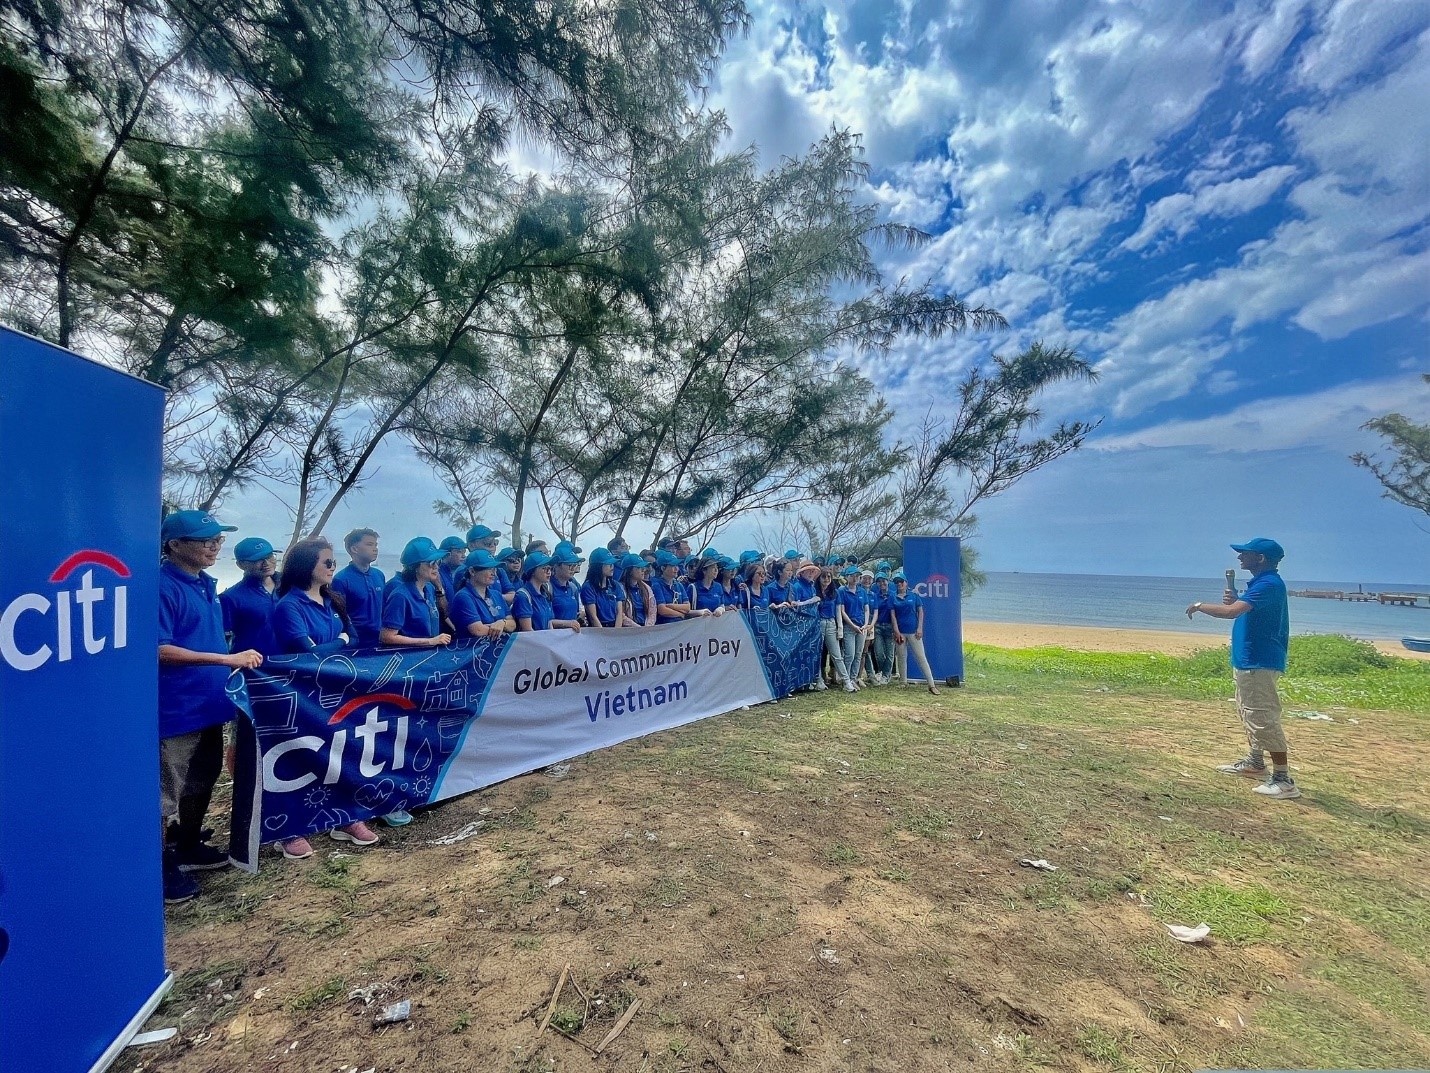 Citi organises beach clean-up on Global Community Day